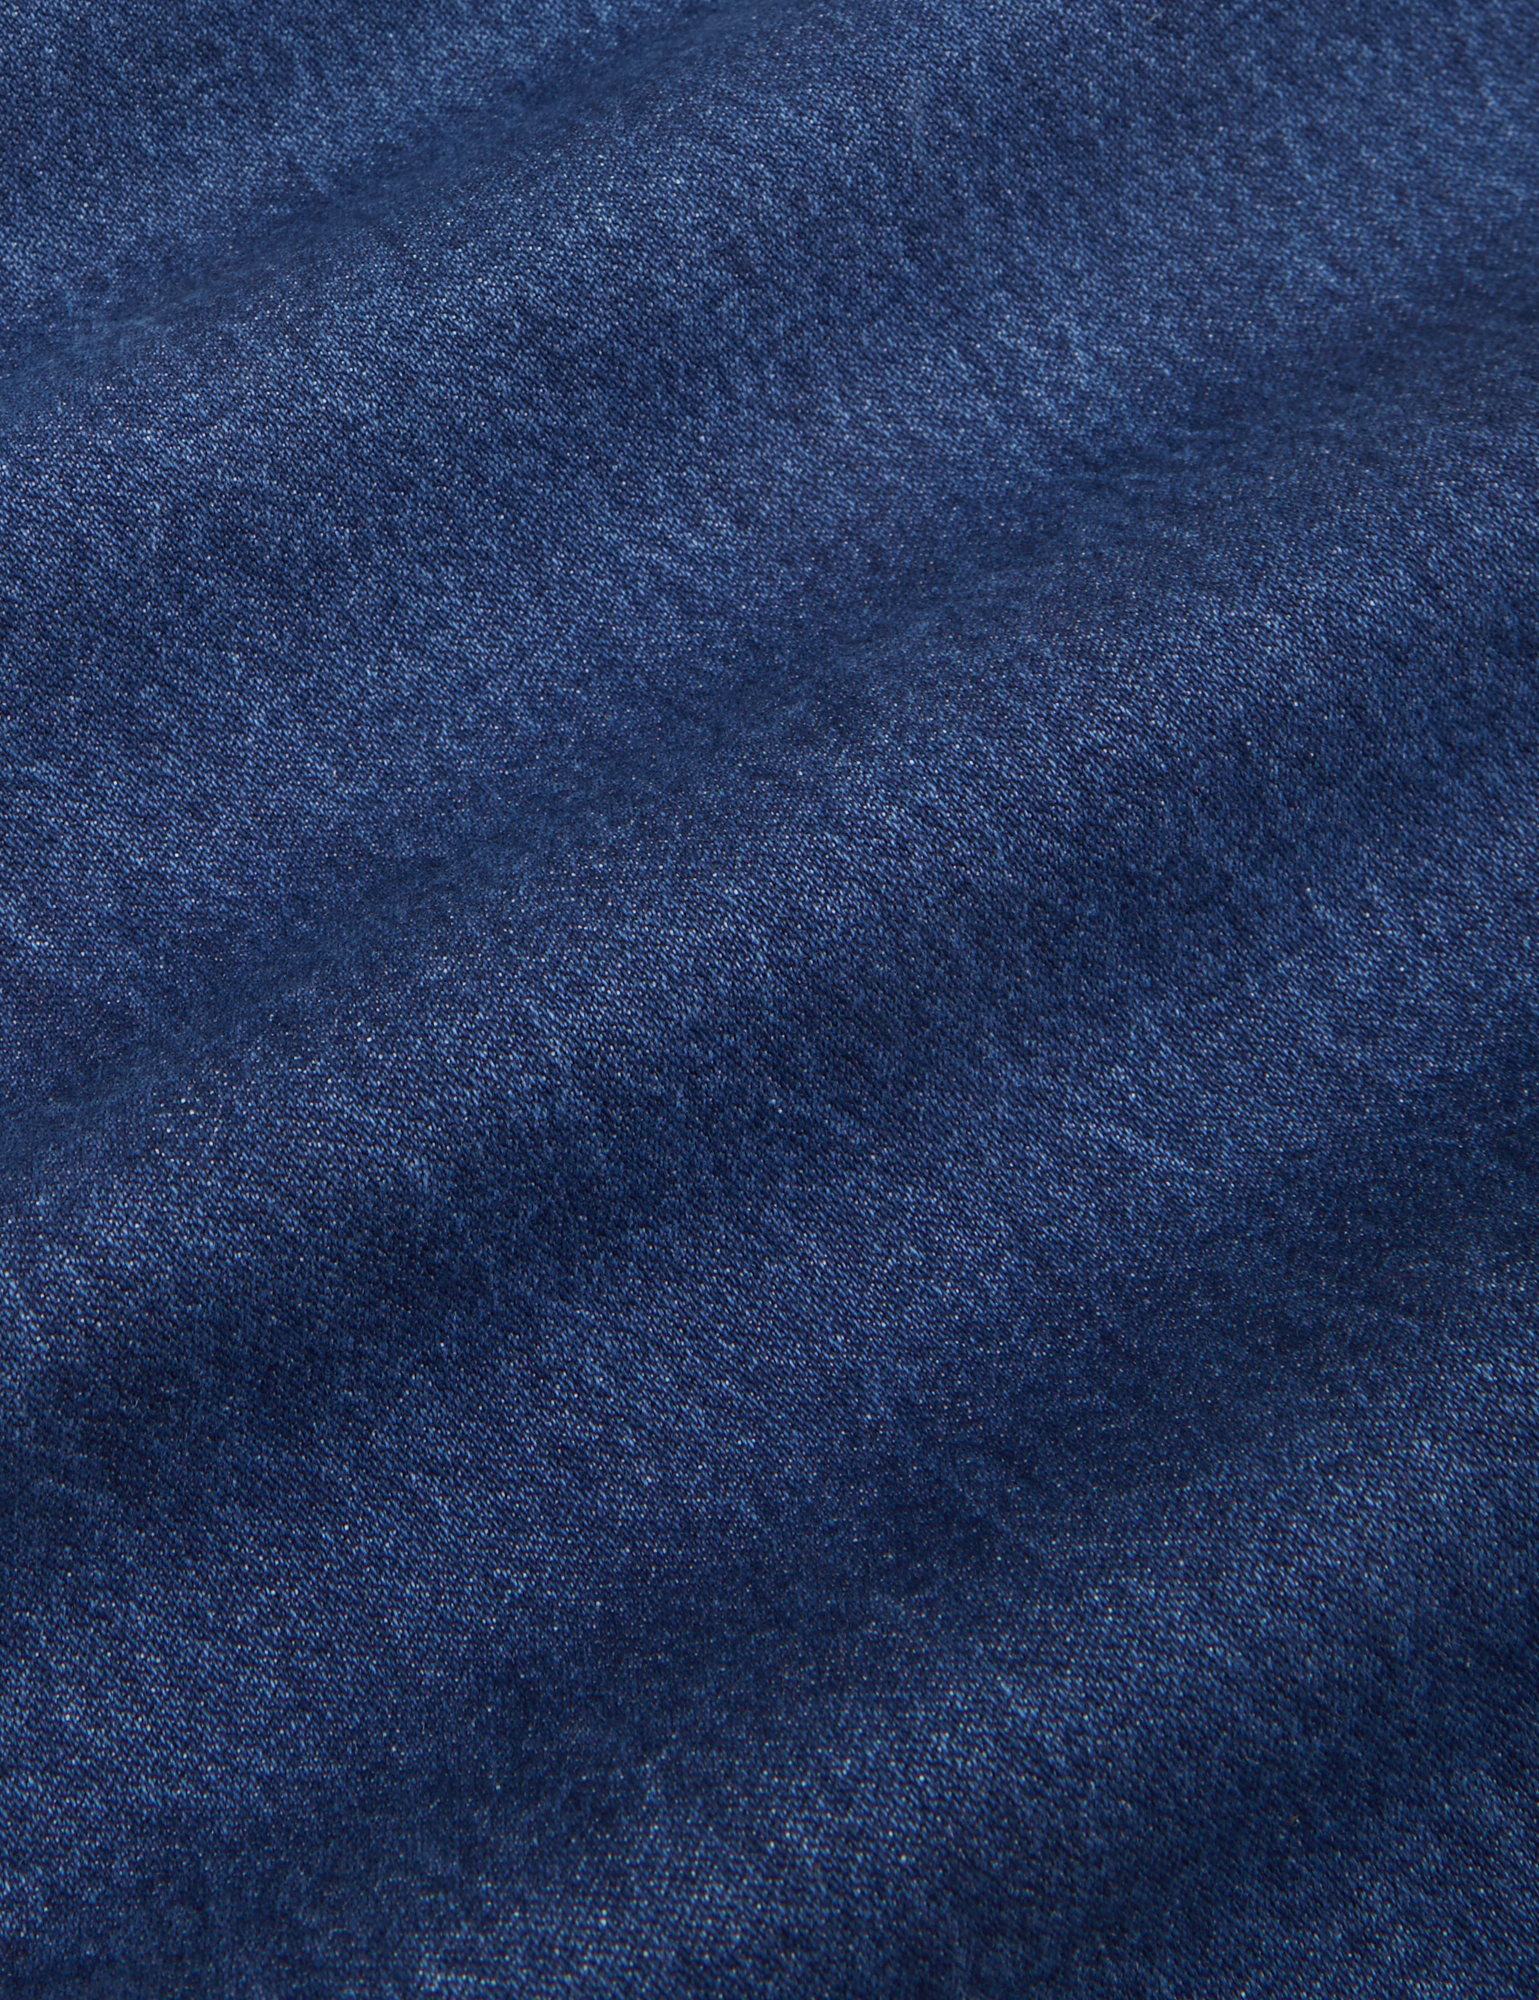 Indigo Wide Leg Trousers in Dark Wash fabric detail close up